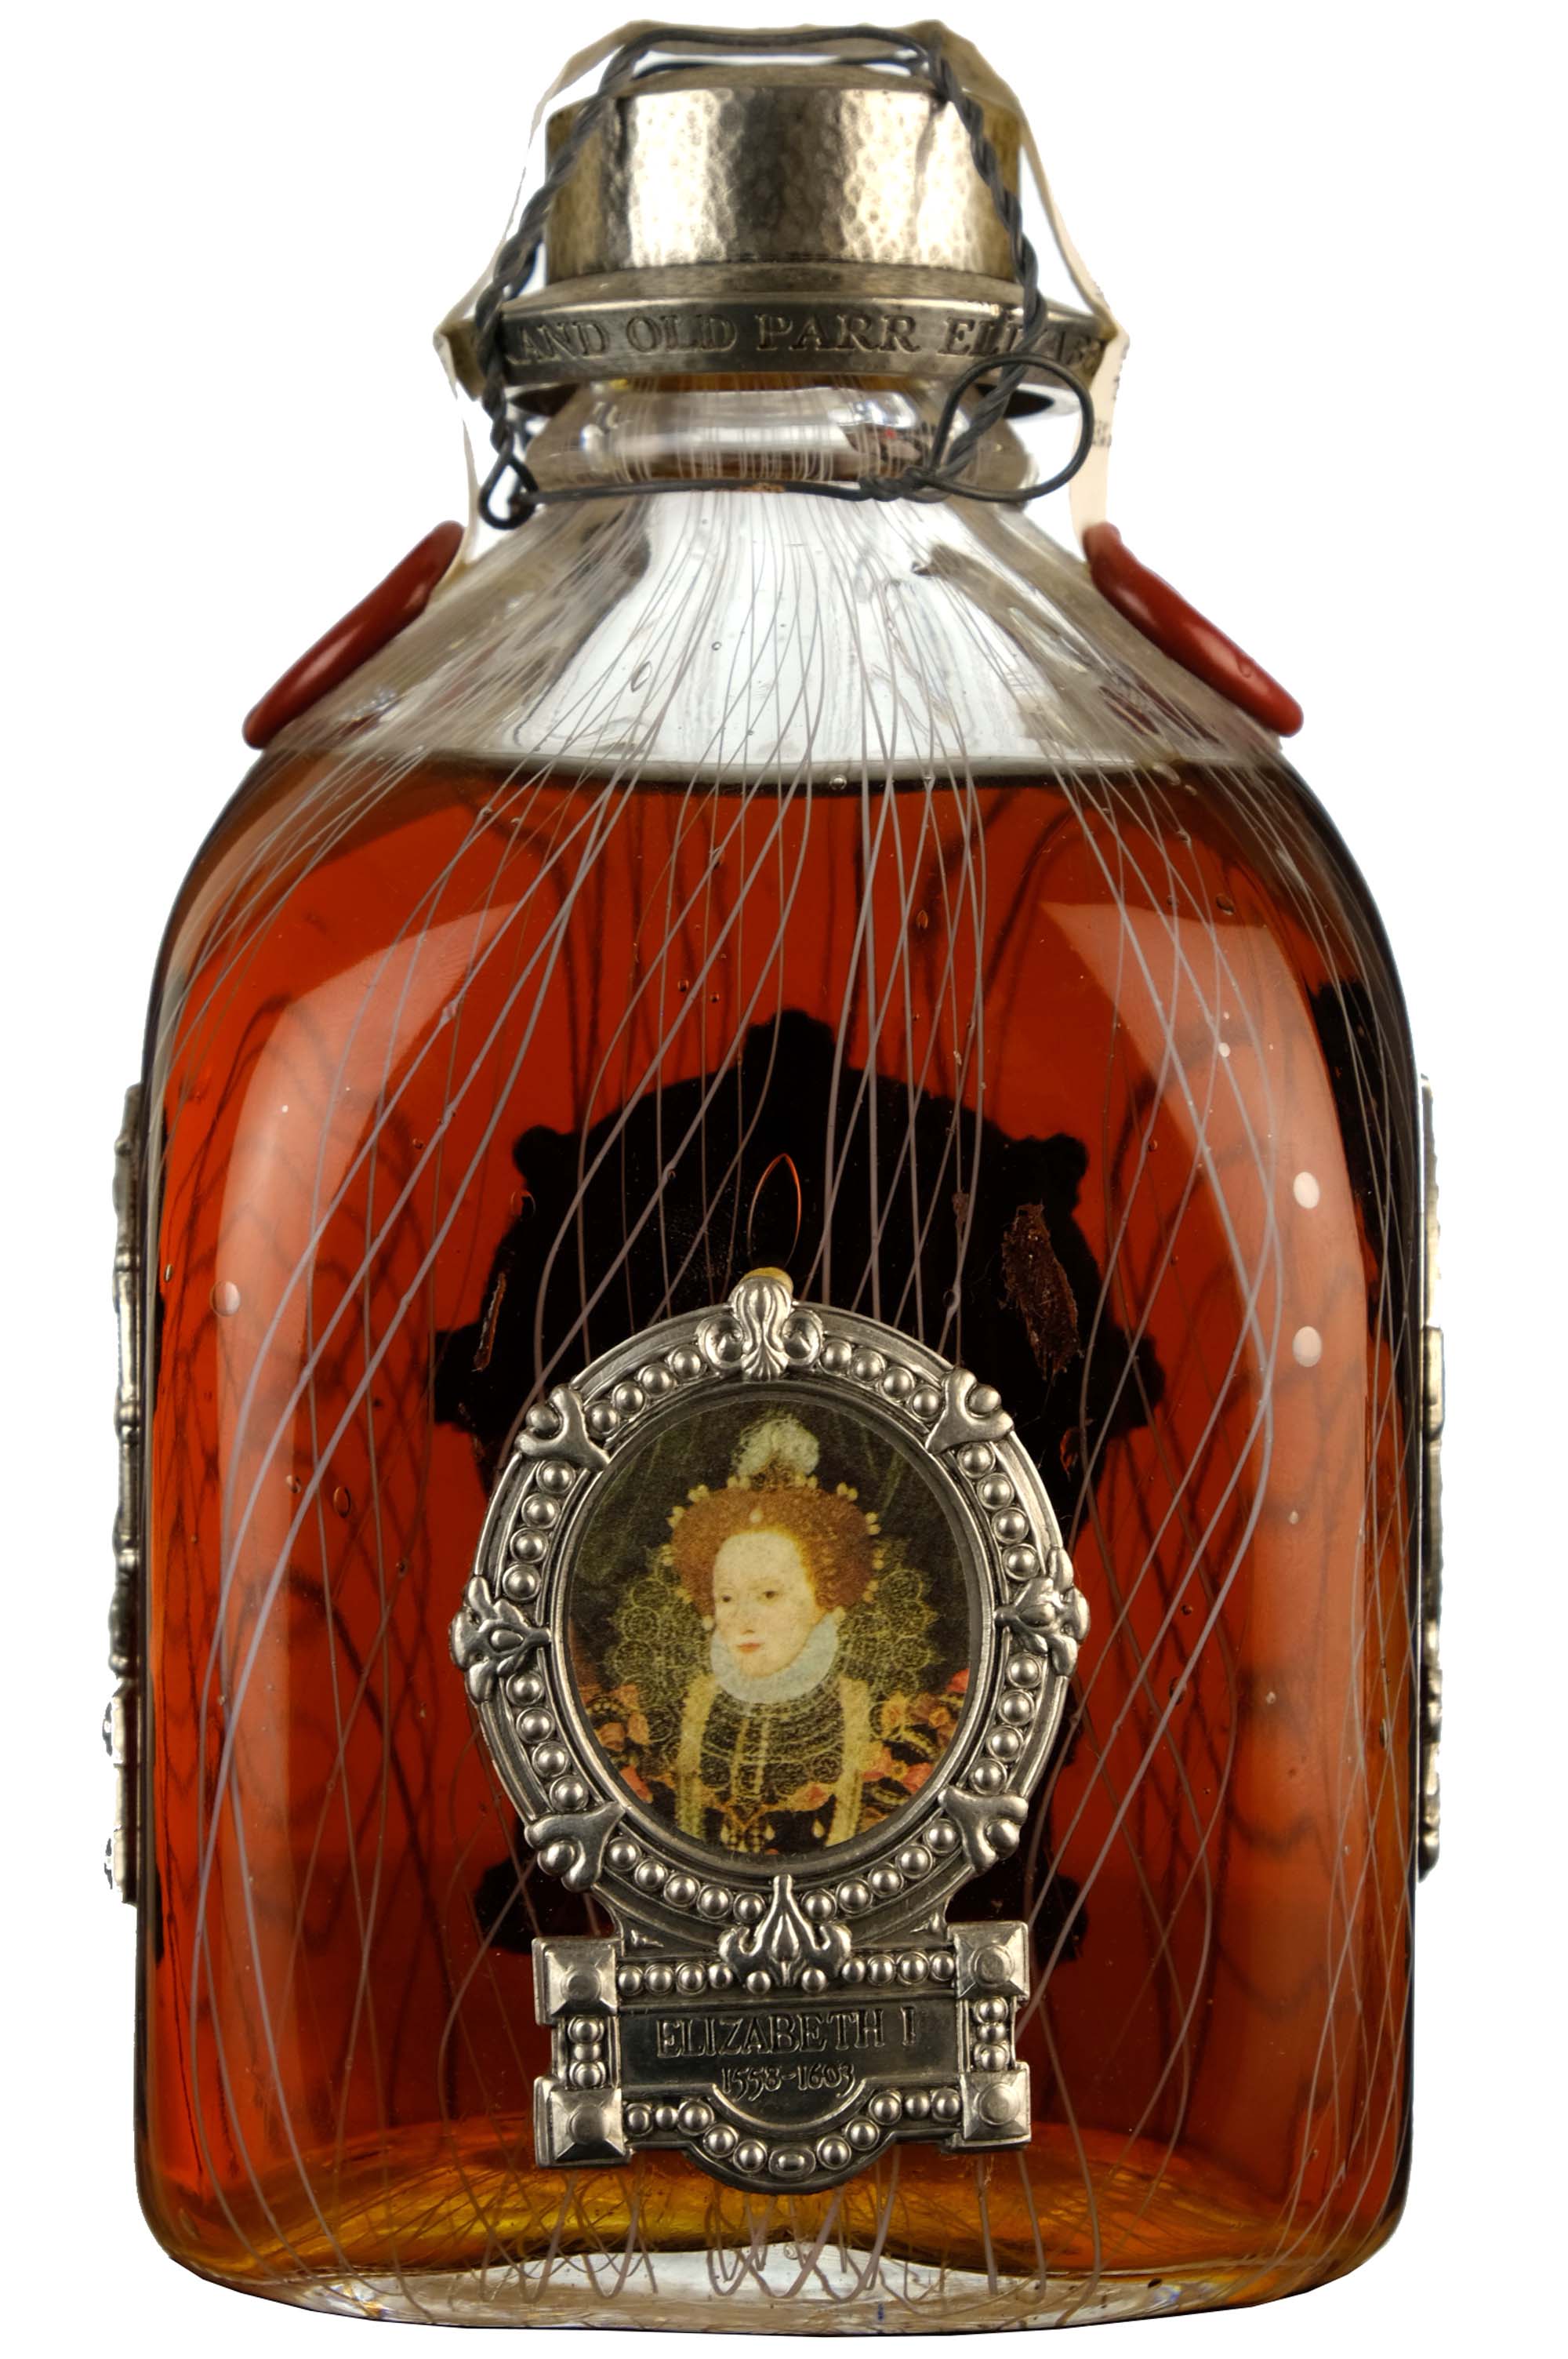 Grand Old Parr Elizabethan | Limited Edition No.8